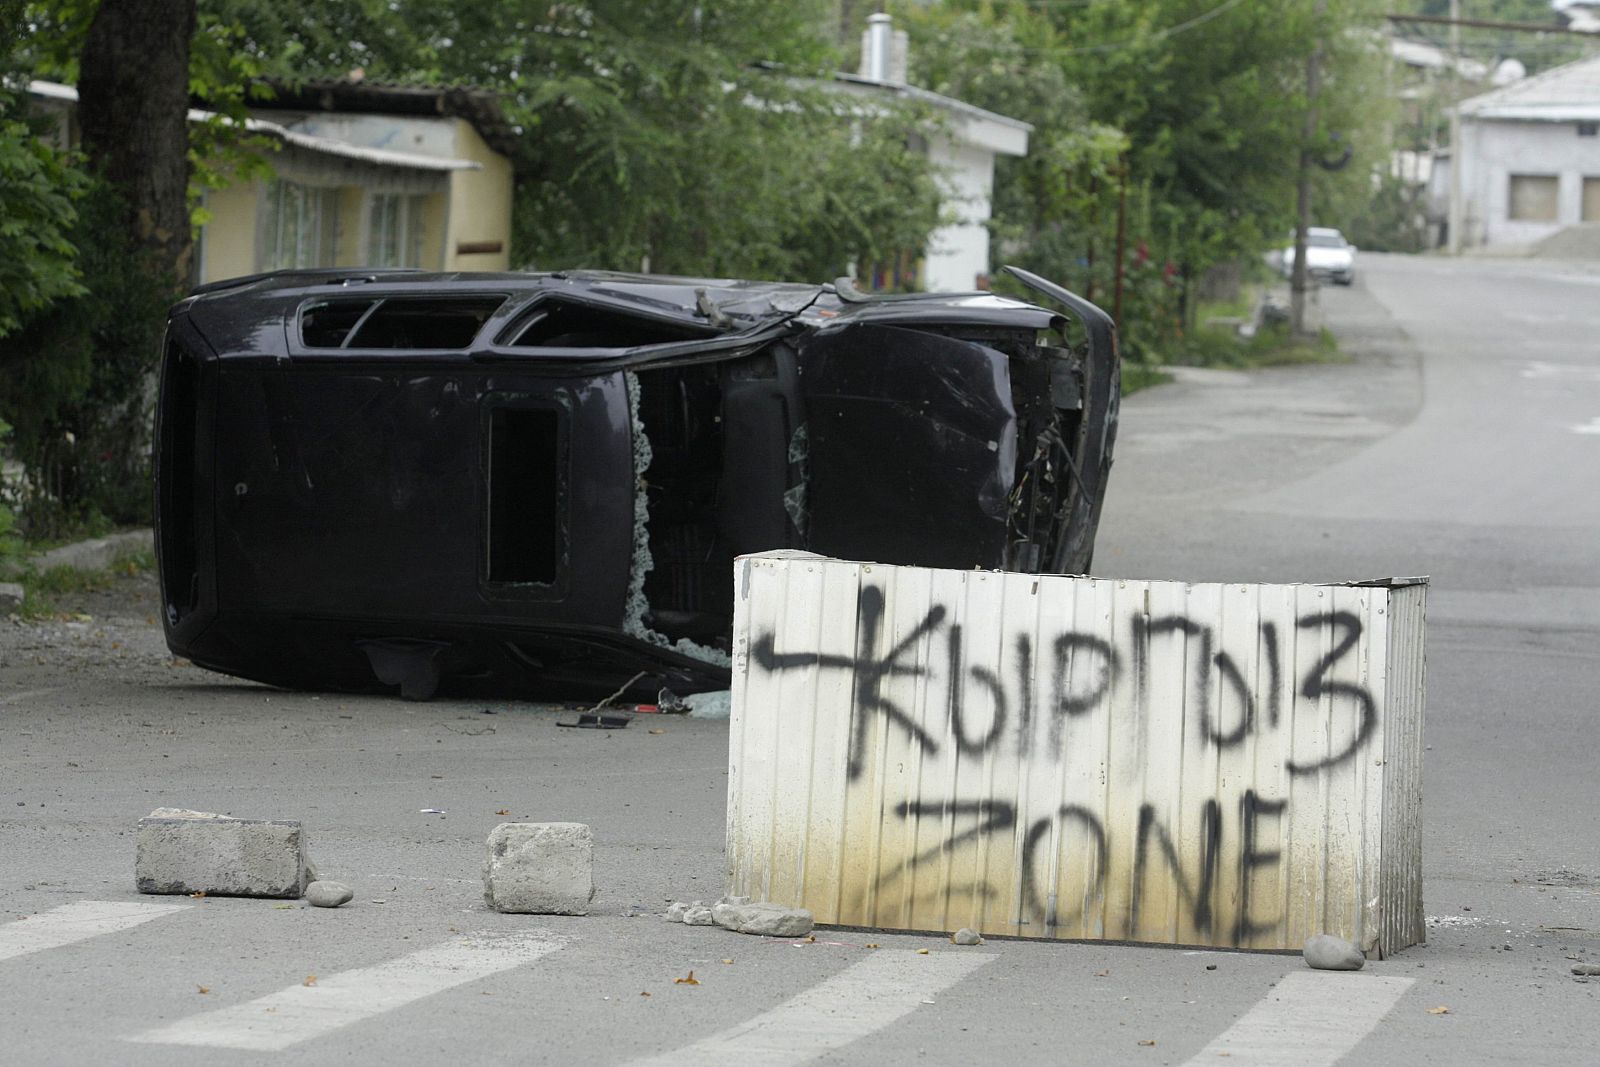 'Zona kirguiz', reza un cartel en una calle de Osh